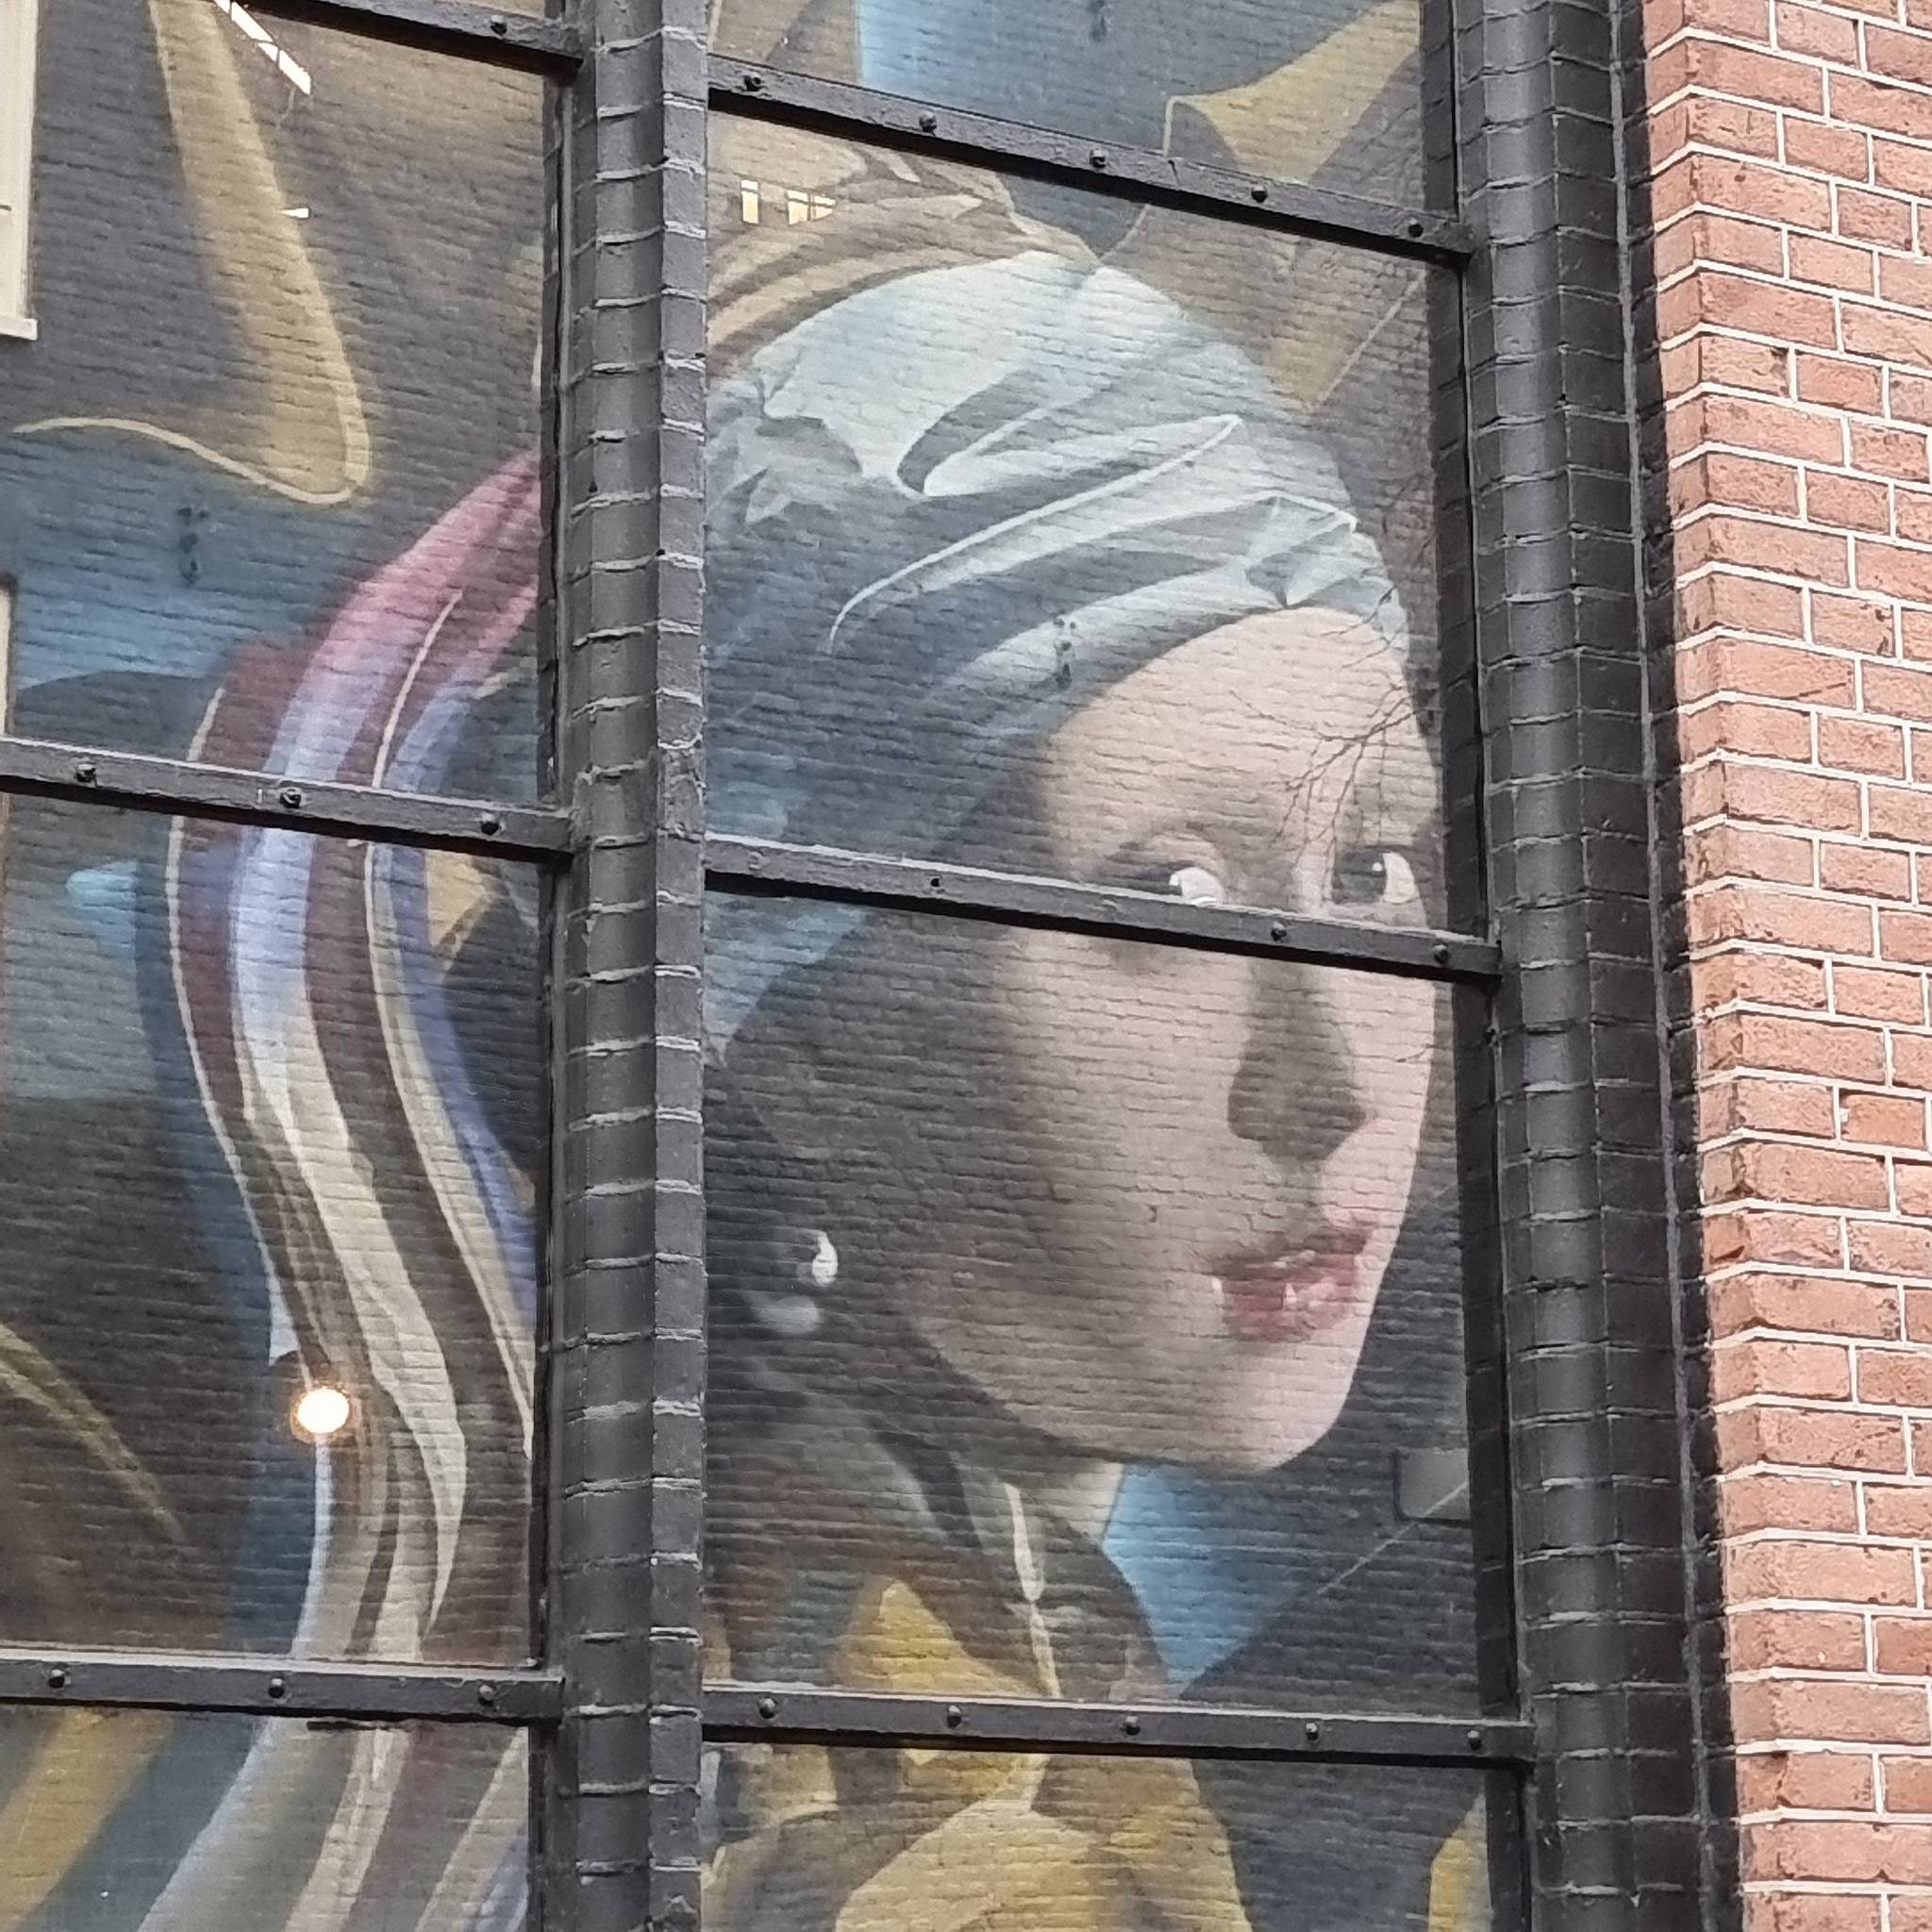 Beyond&mdash;Girl with the pearl, J.Vermeer